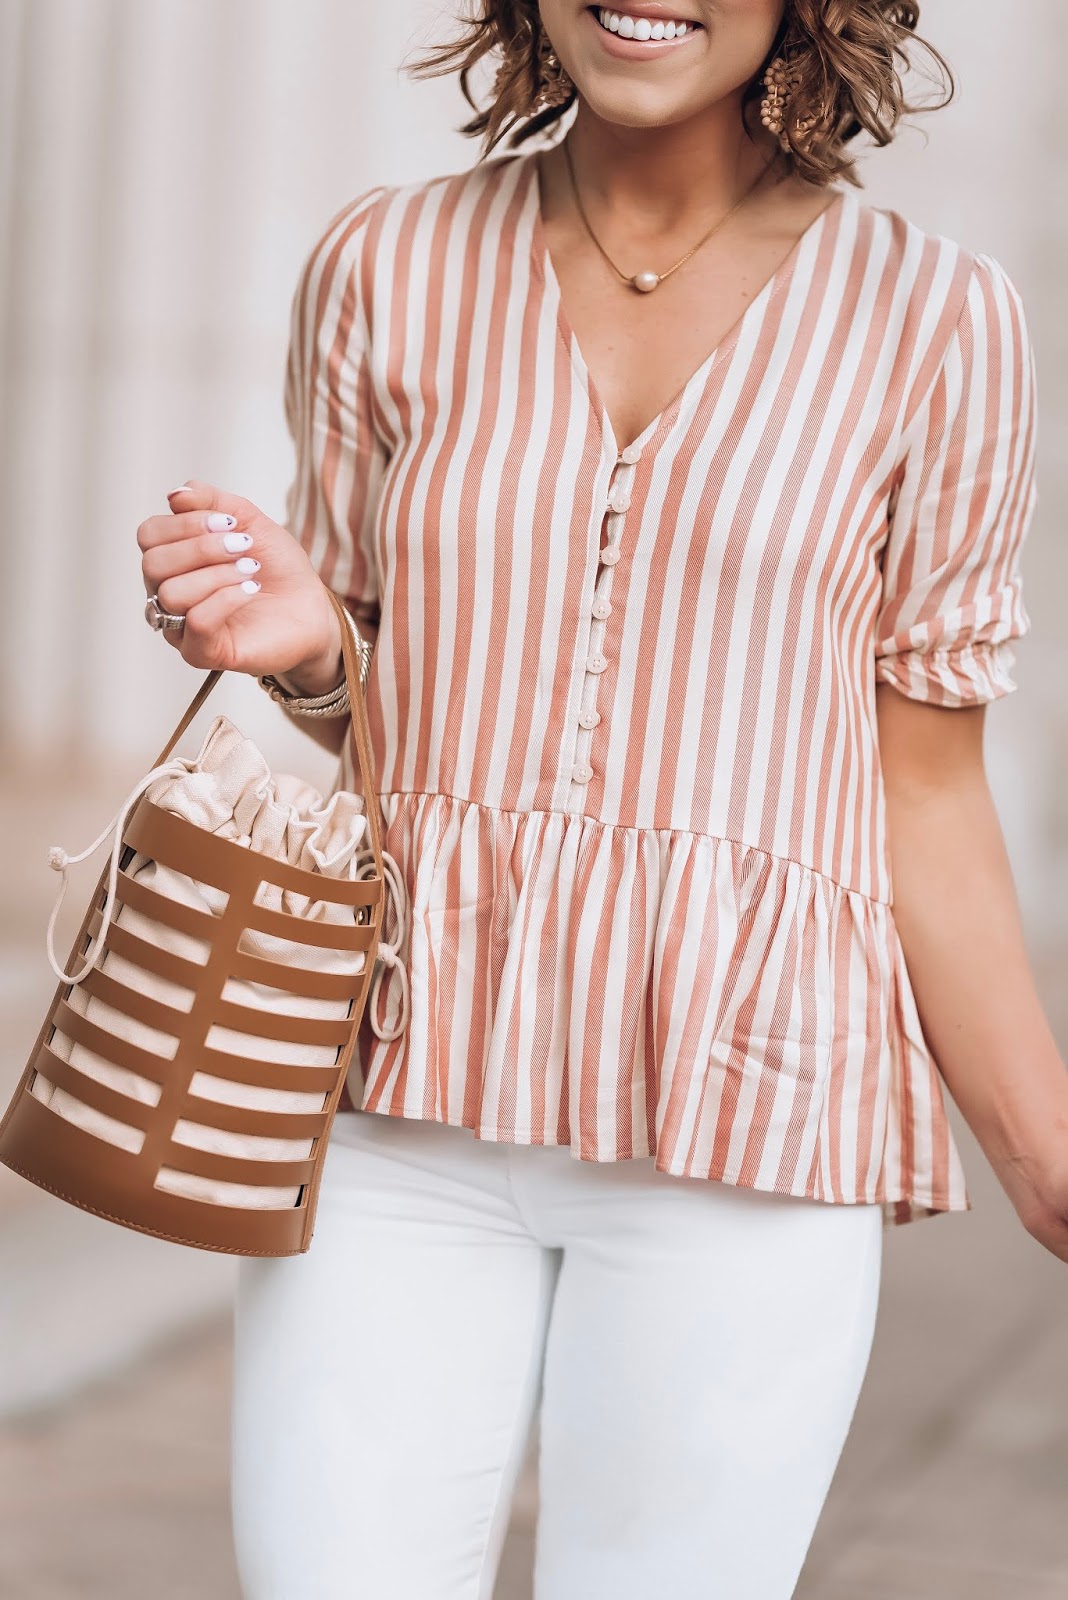 Stripes for Spring: Madewell Stripe Peplum Top + white jeans & leopard sandals - Something Delightful Blog #springstyle #springfashion #springlooks